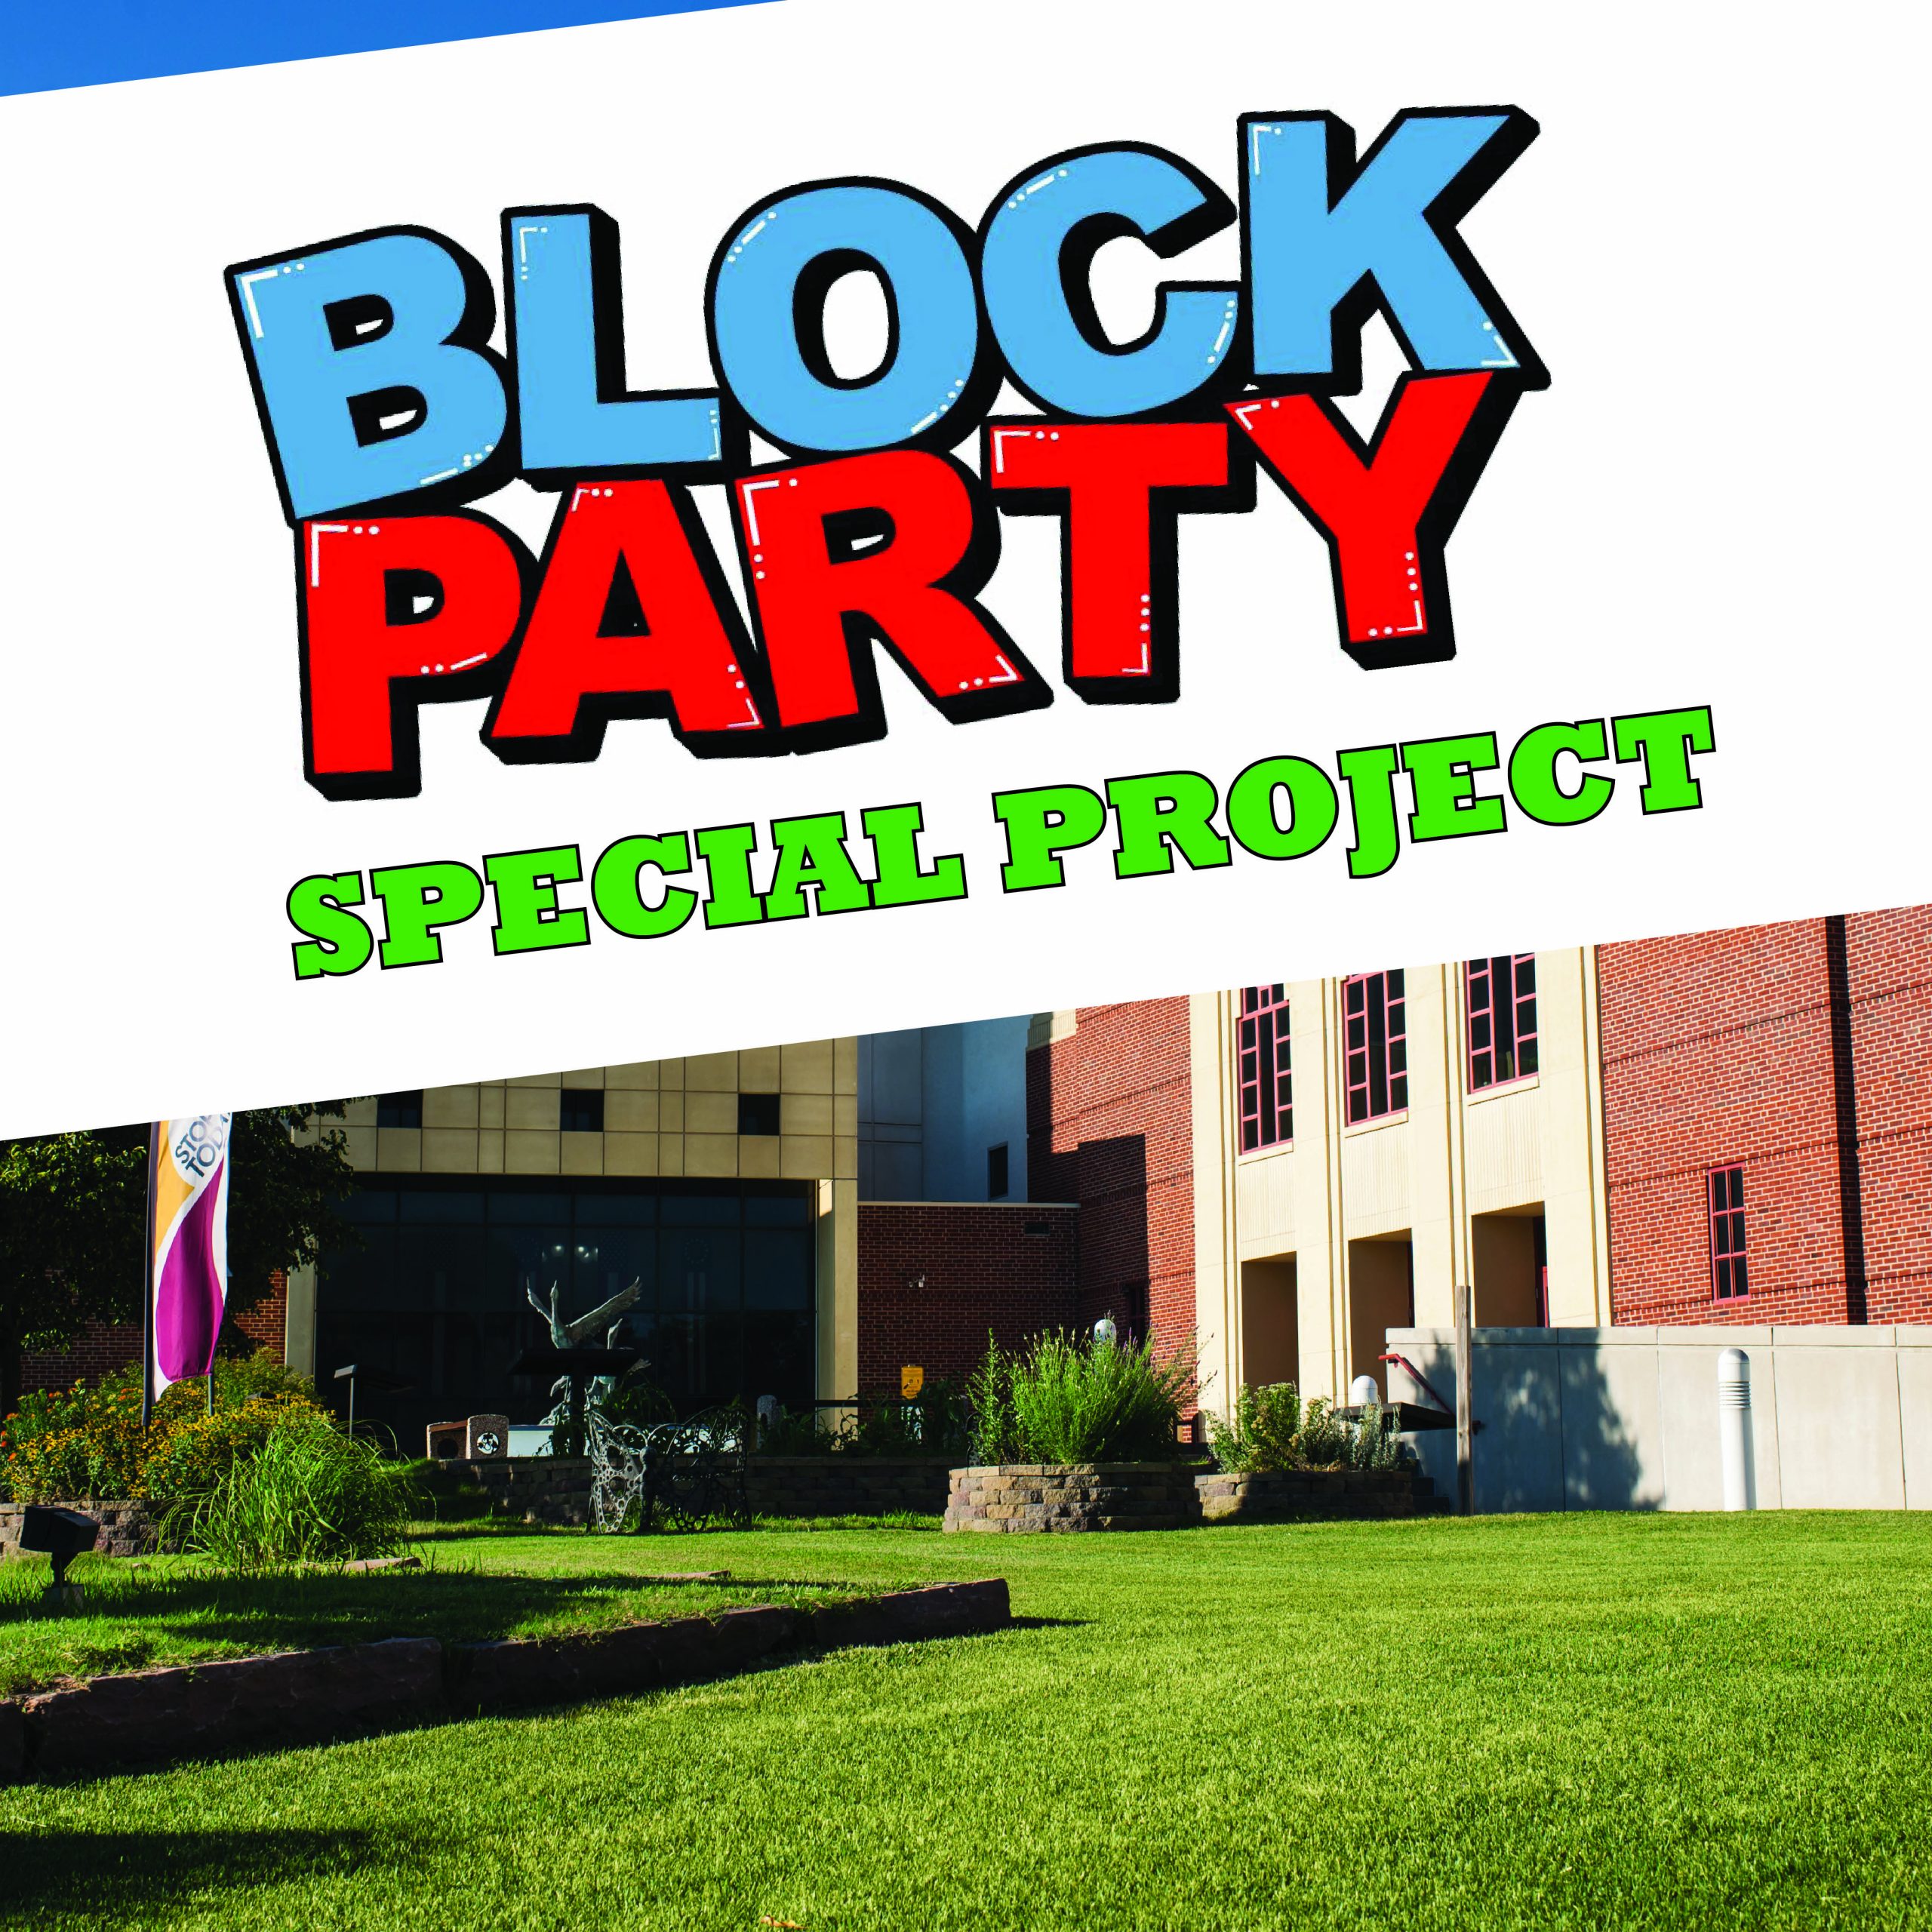 Block party artwork